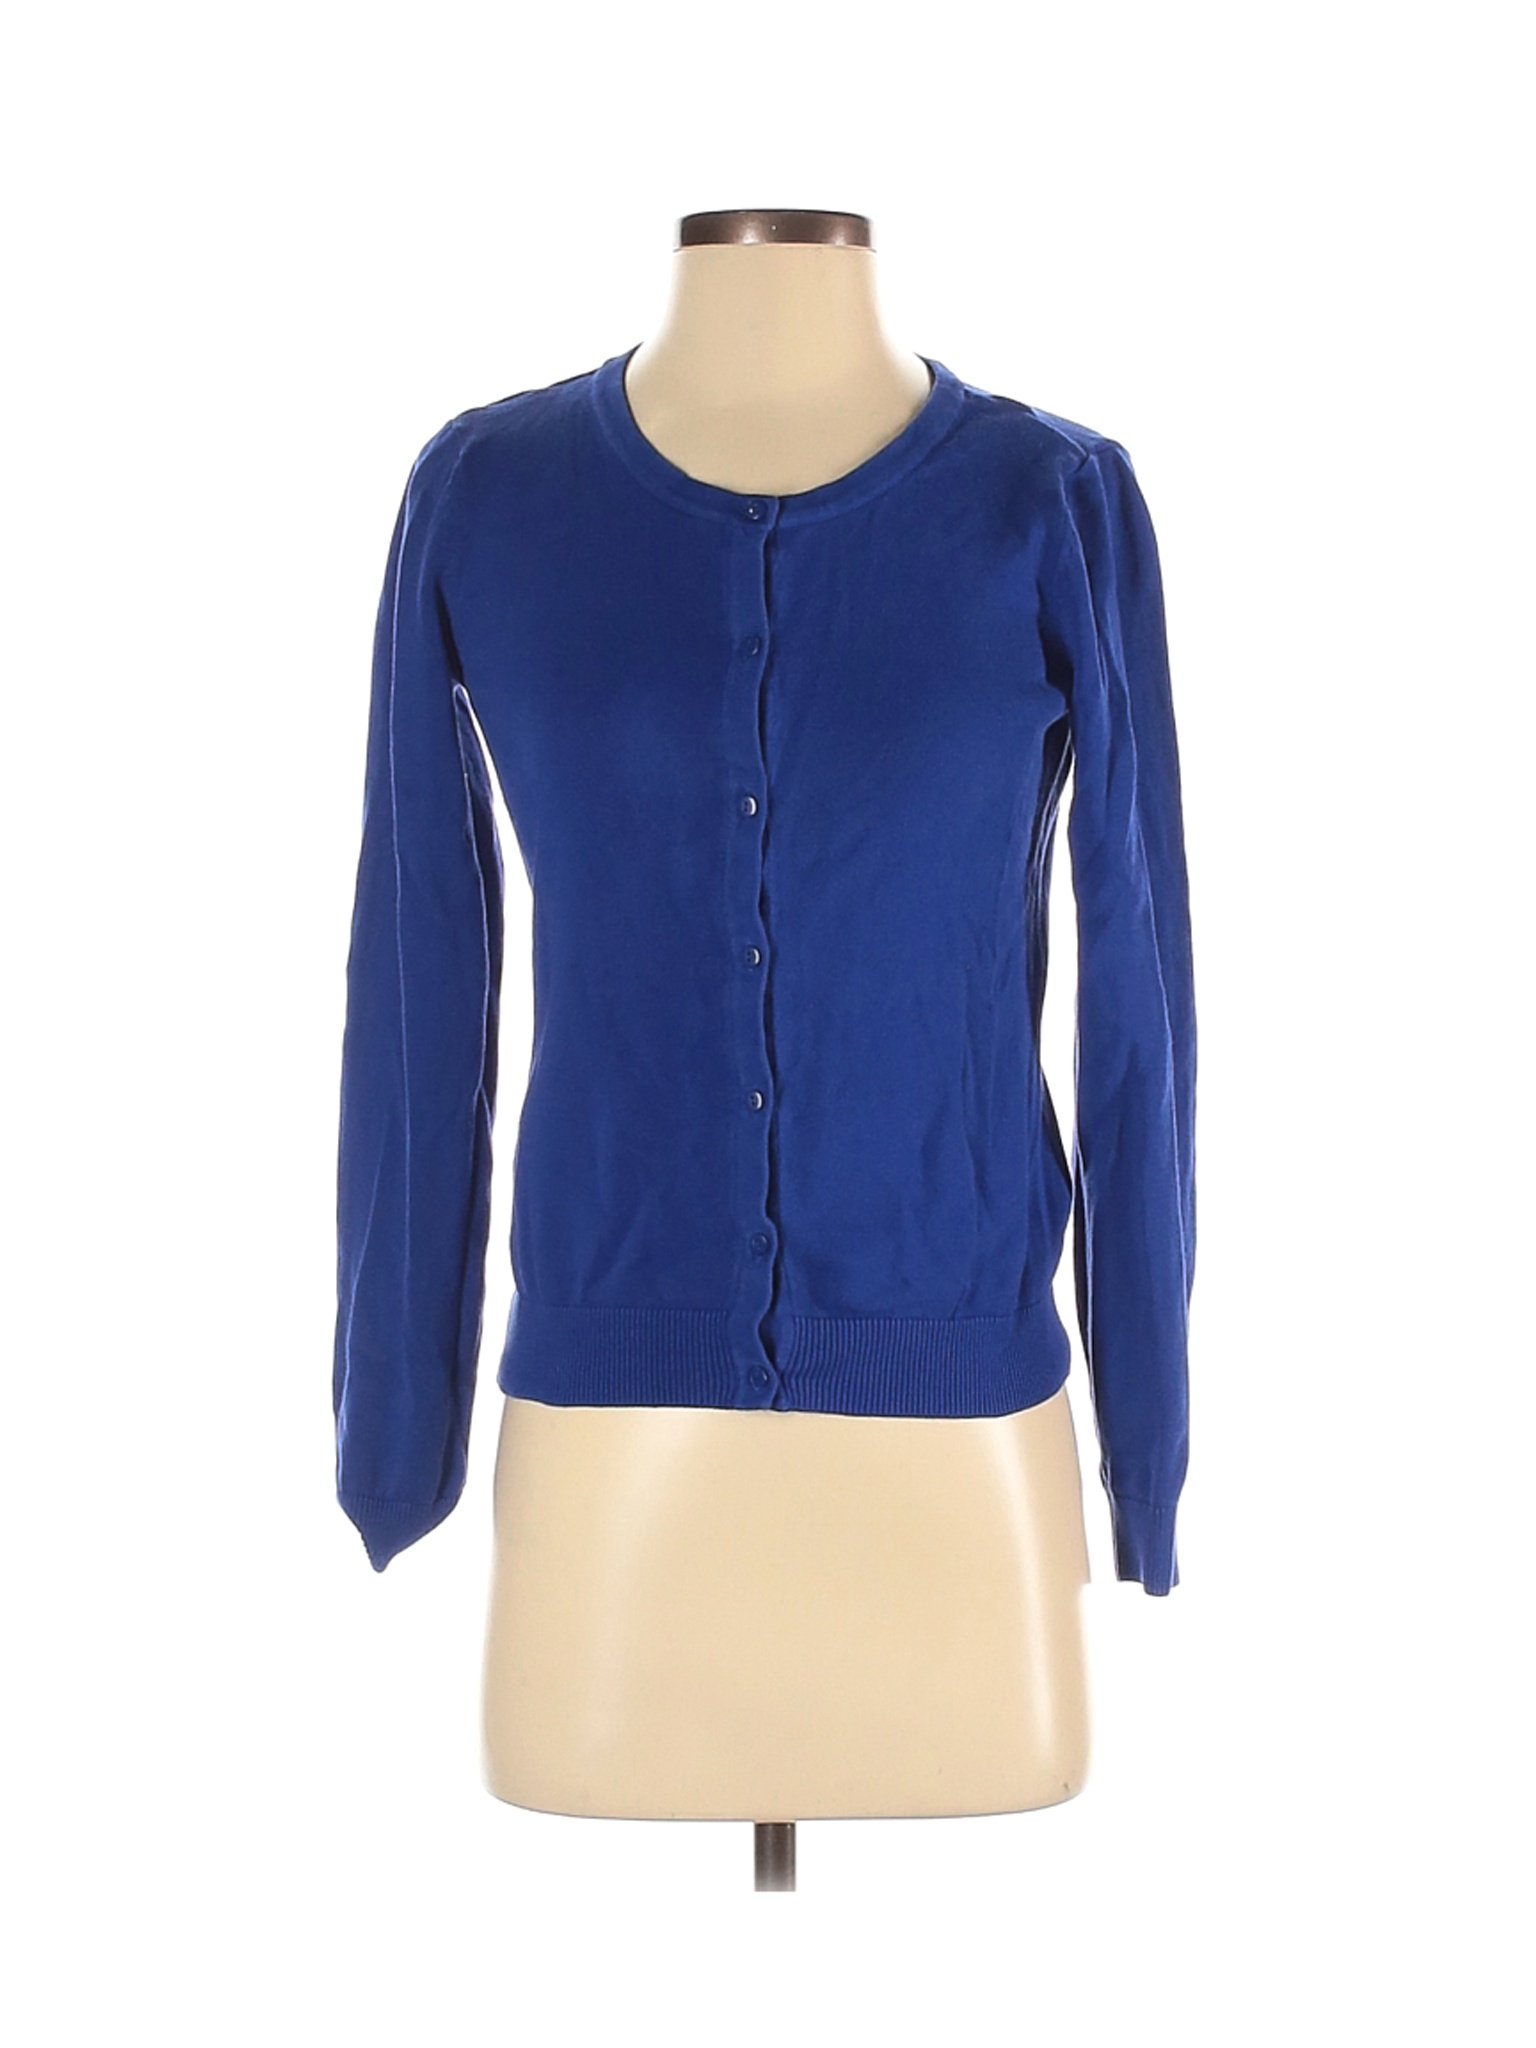 H&M Women Blue Cardigan S | eBay